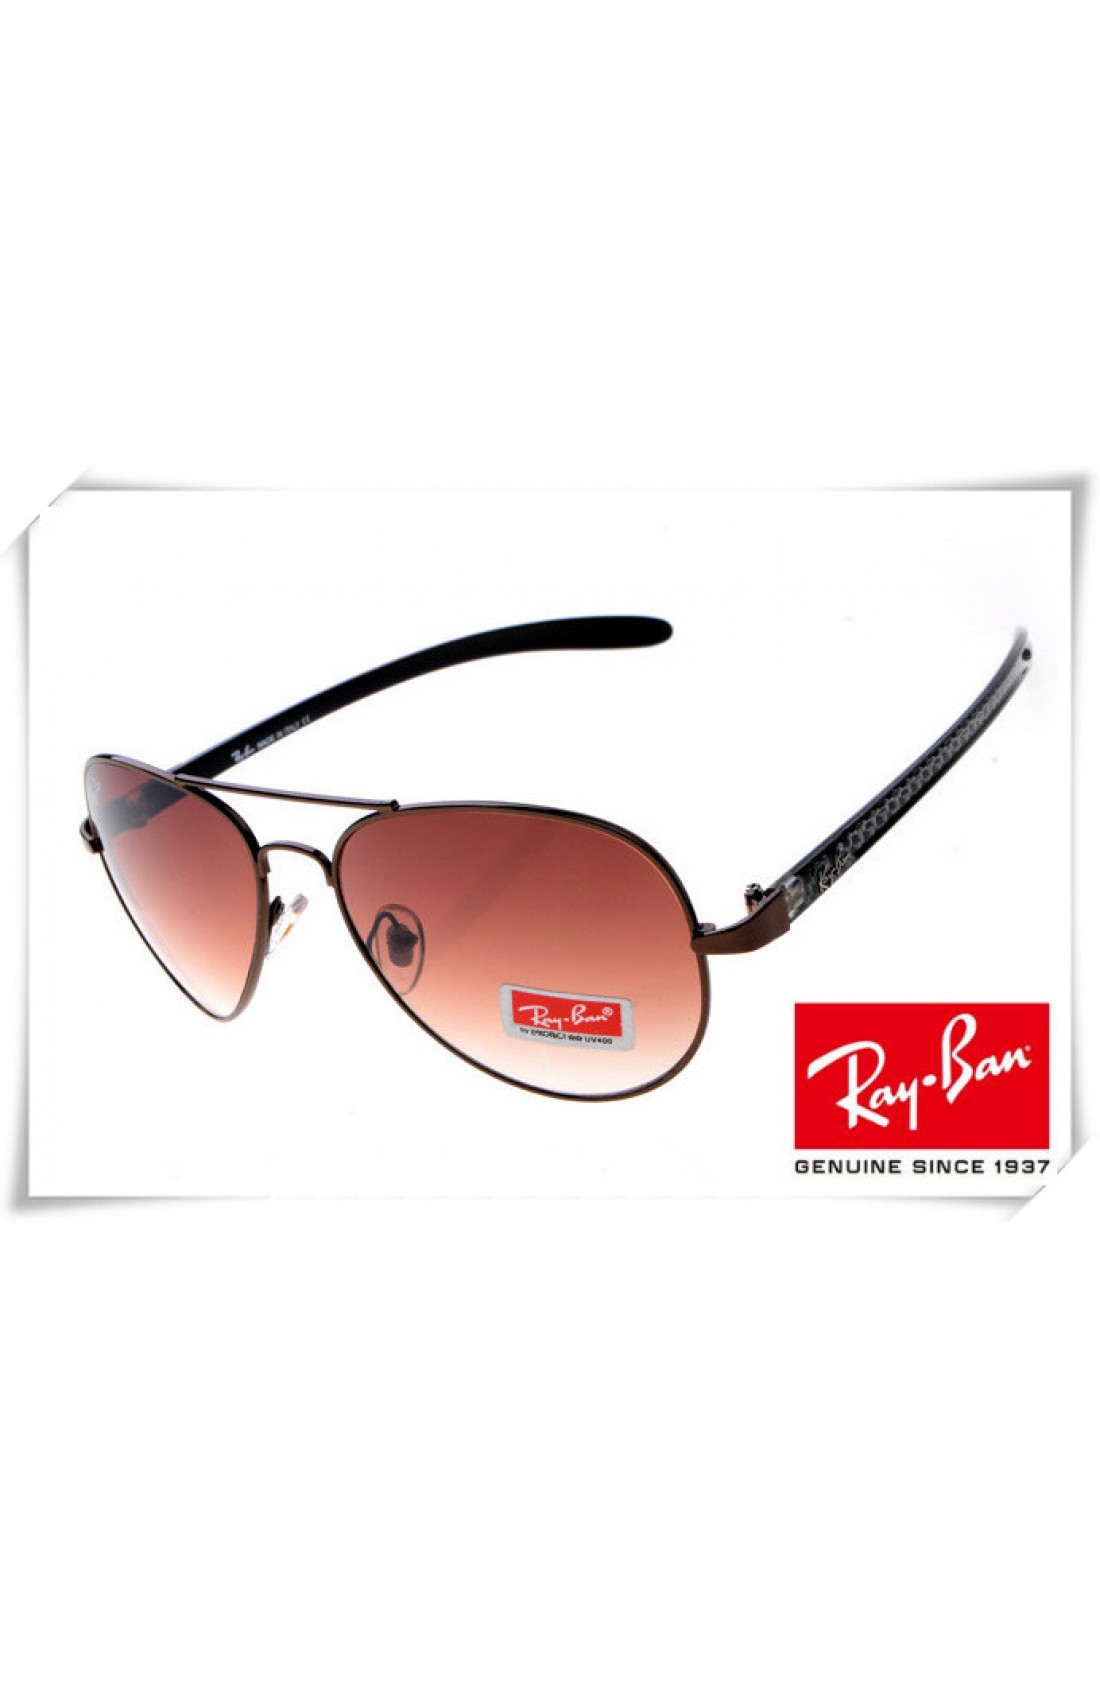 Replica Ray Ban Rb07 Aviator Tech Sunglasses Carbon Fibre Brown Black Frame Rose Brown Gradient Lens Outlet